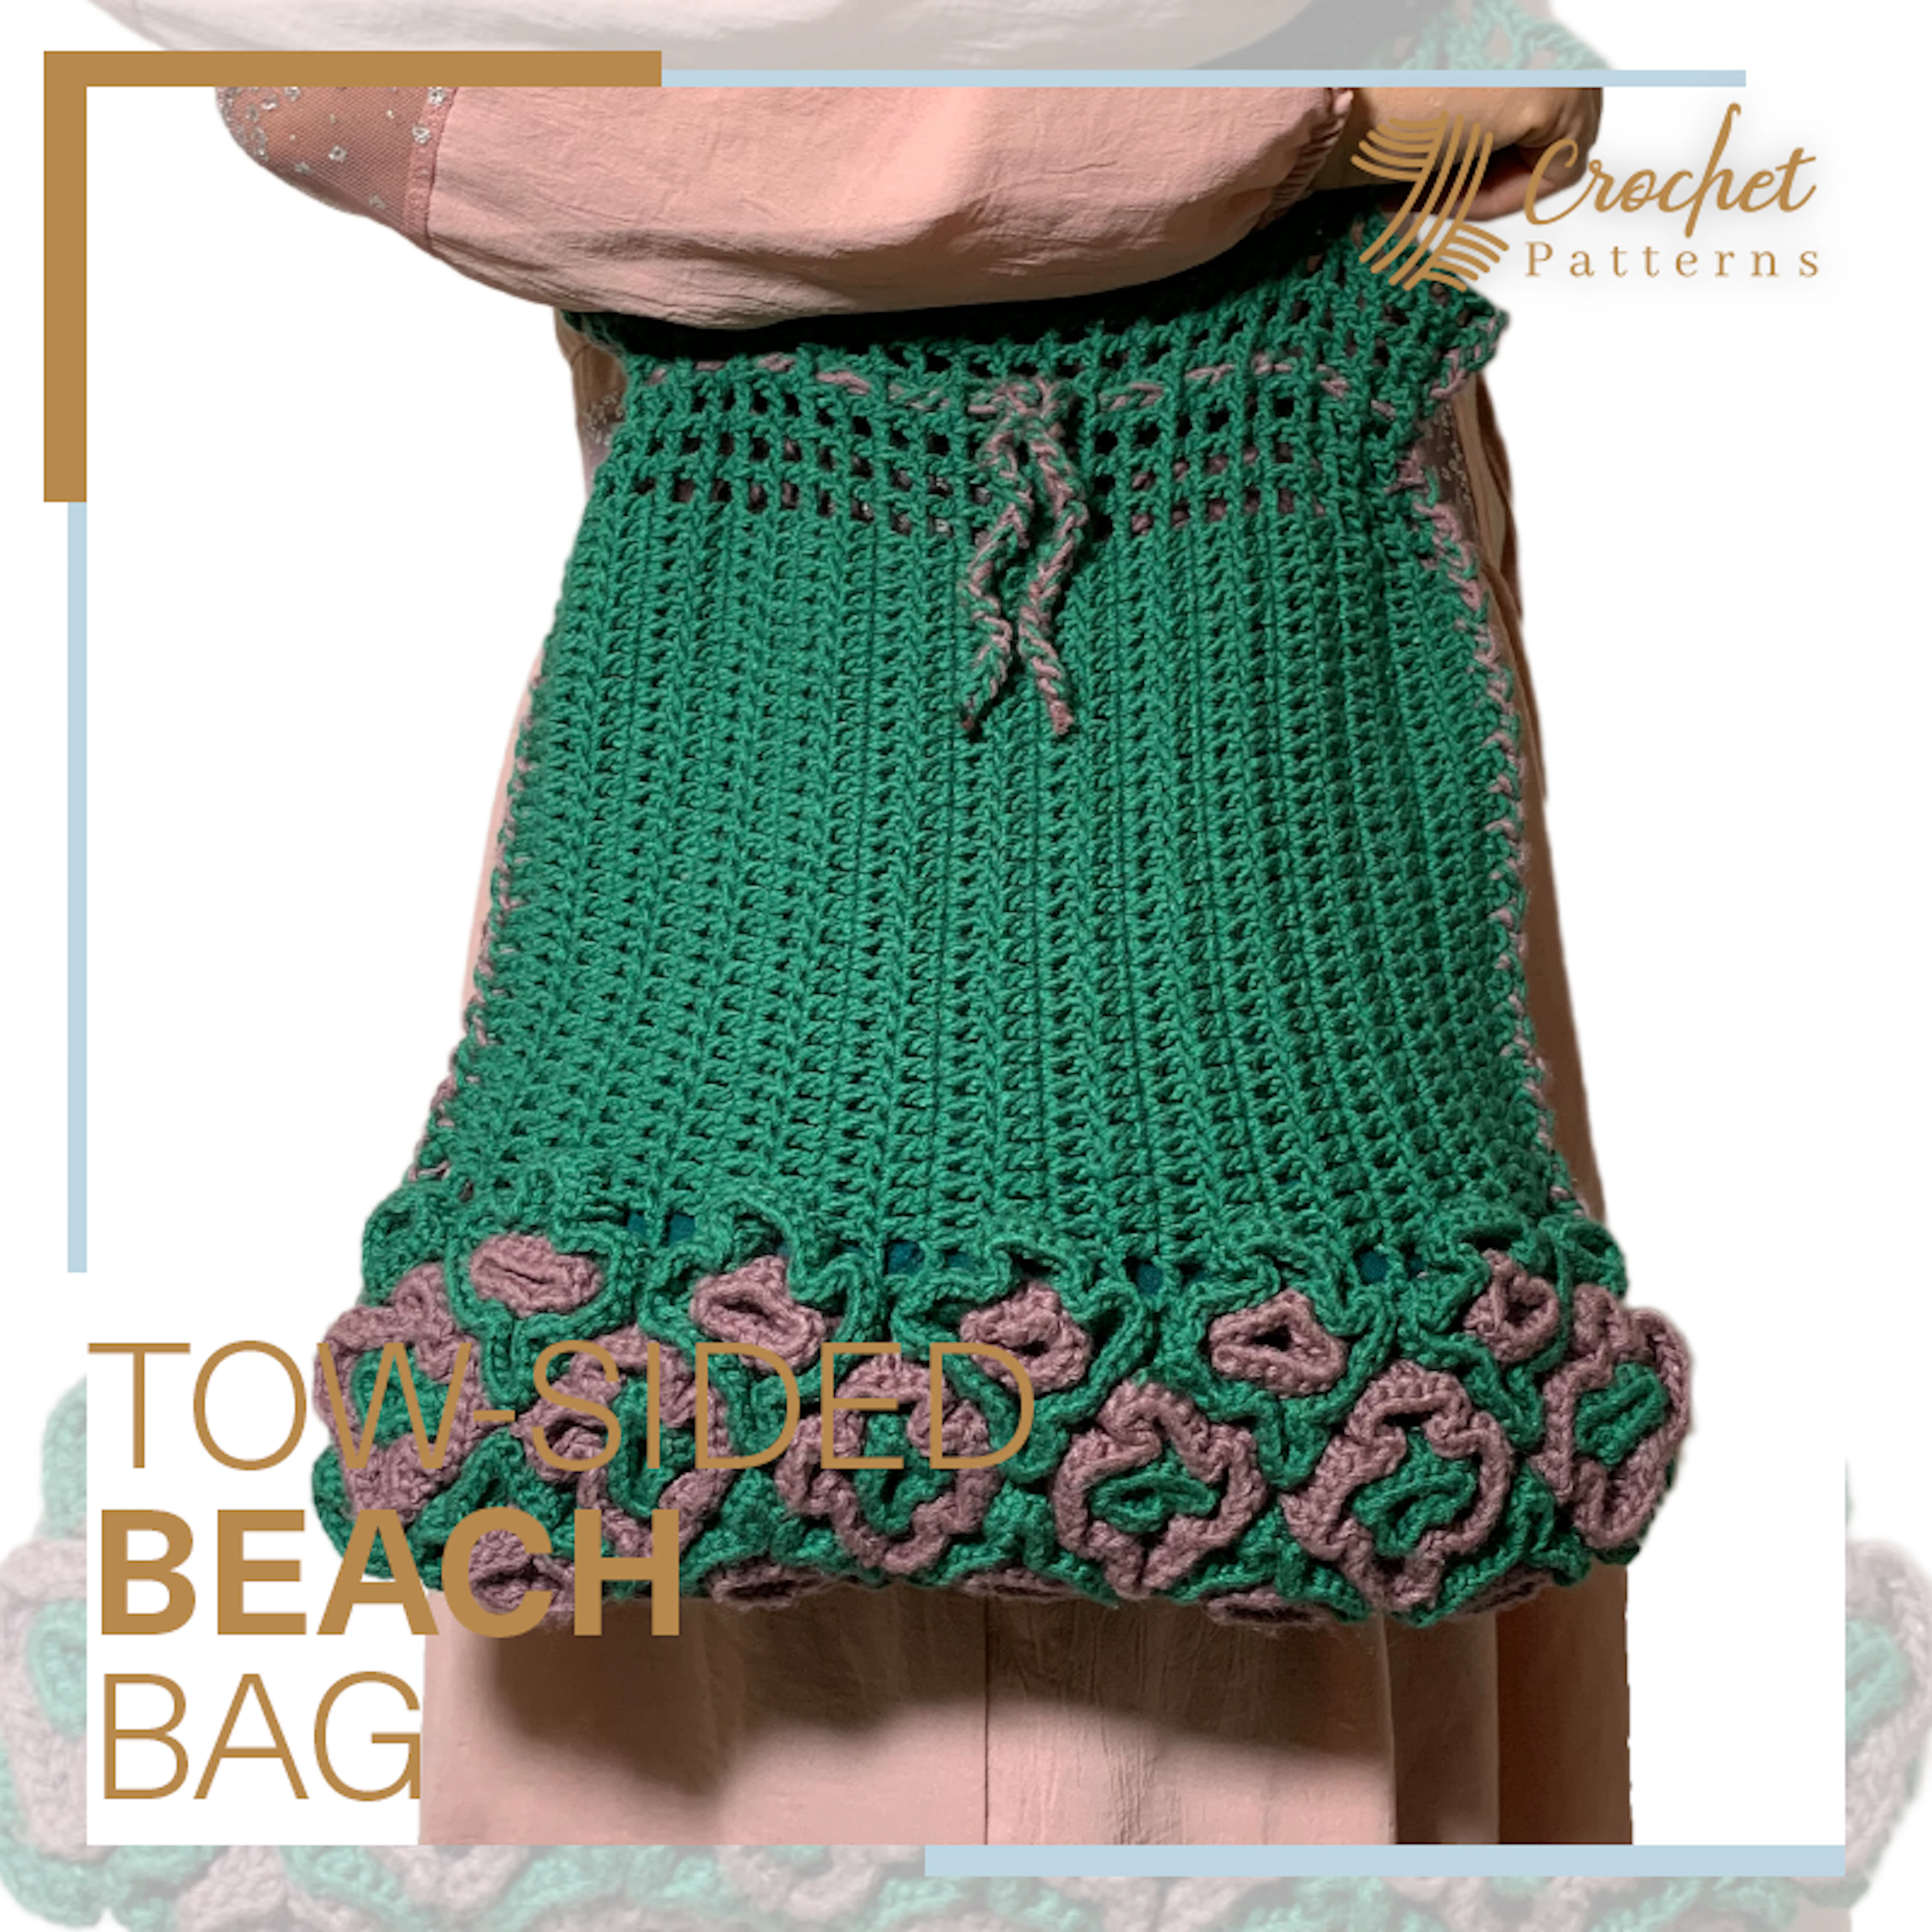 Two-Sided Beach Bag Crochet Pattern